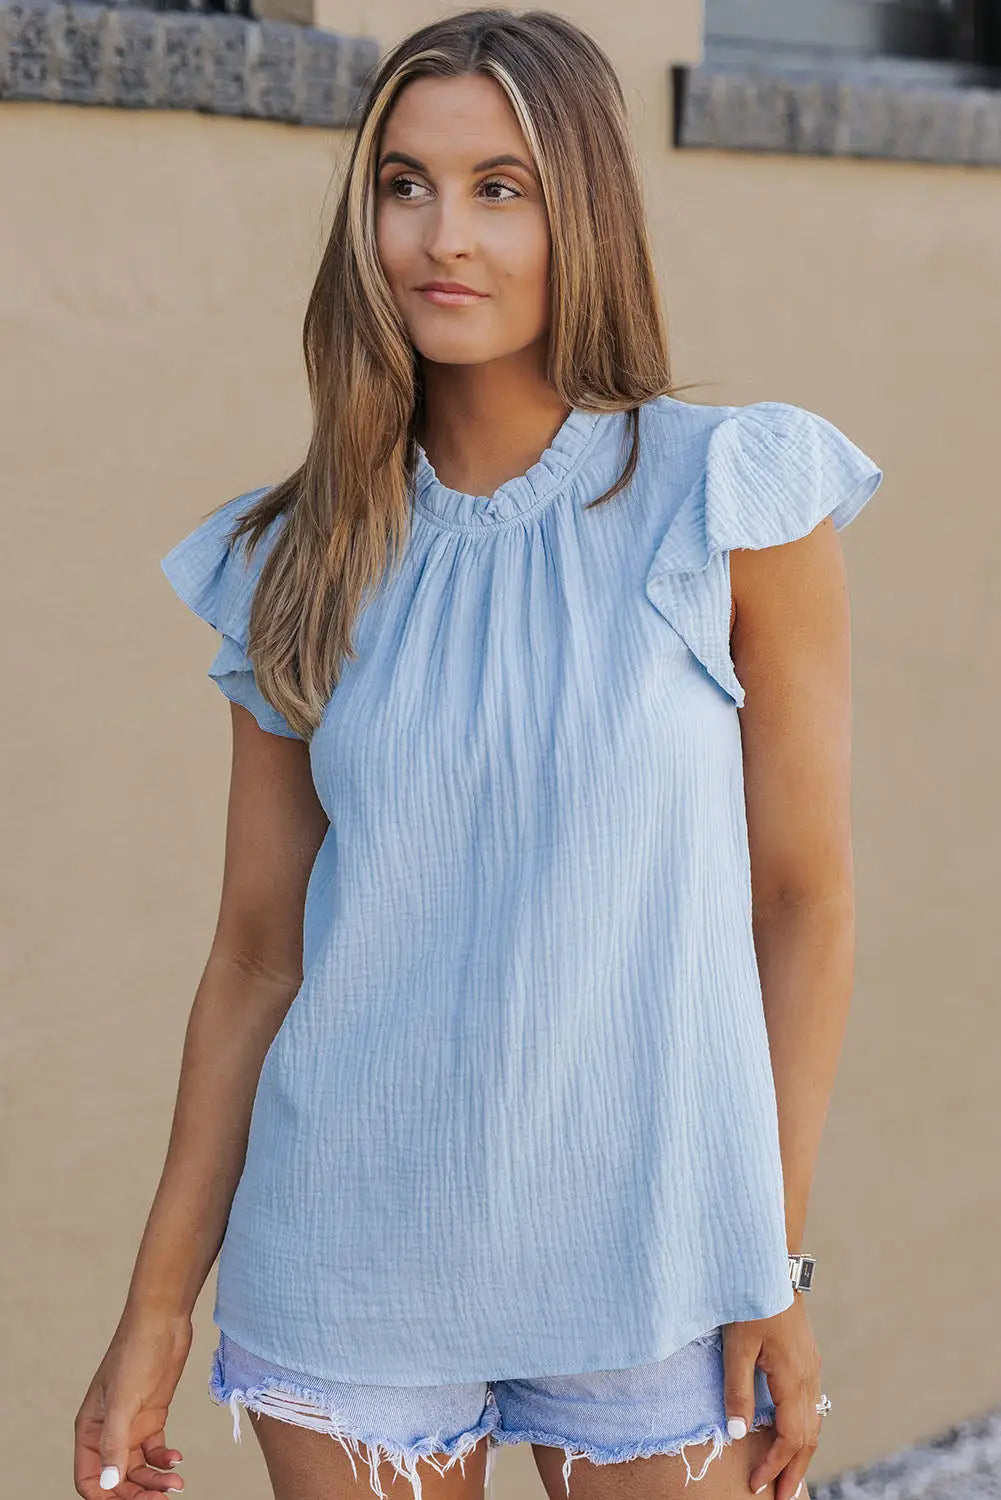 Rose flutter sleeve frilled neck textured blouse - sky blue / s / 100% cotton - tops